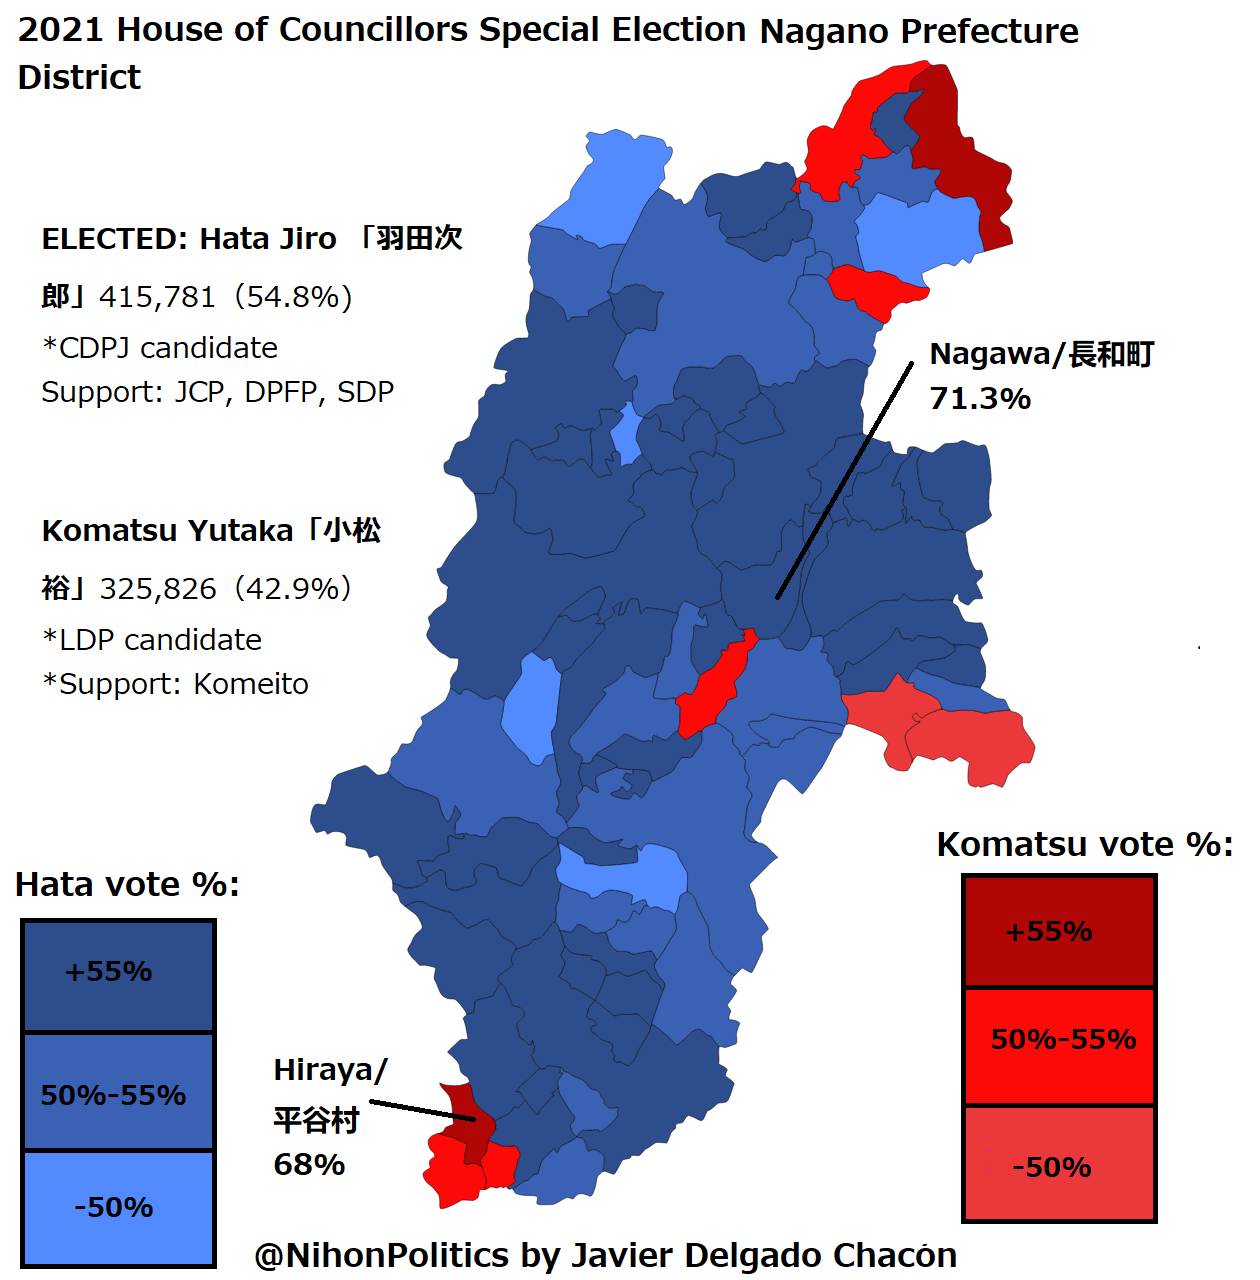 2021 Nagano Prefecture HoC Special Election results